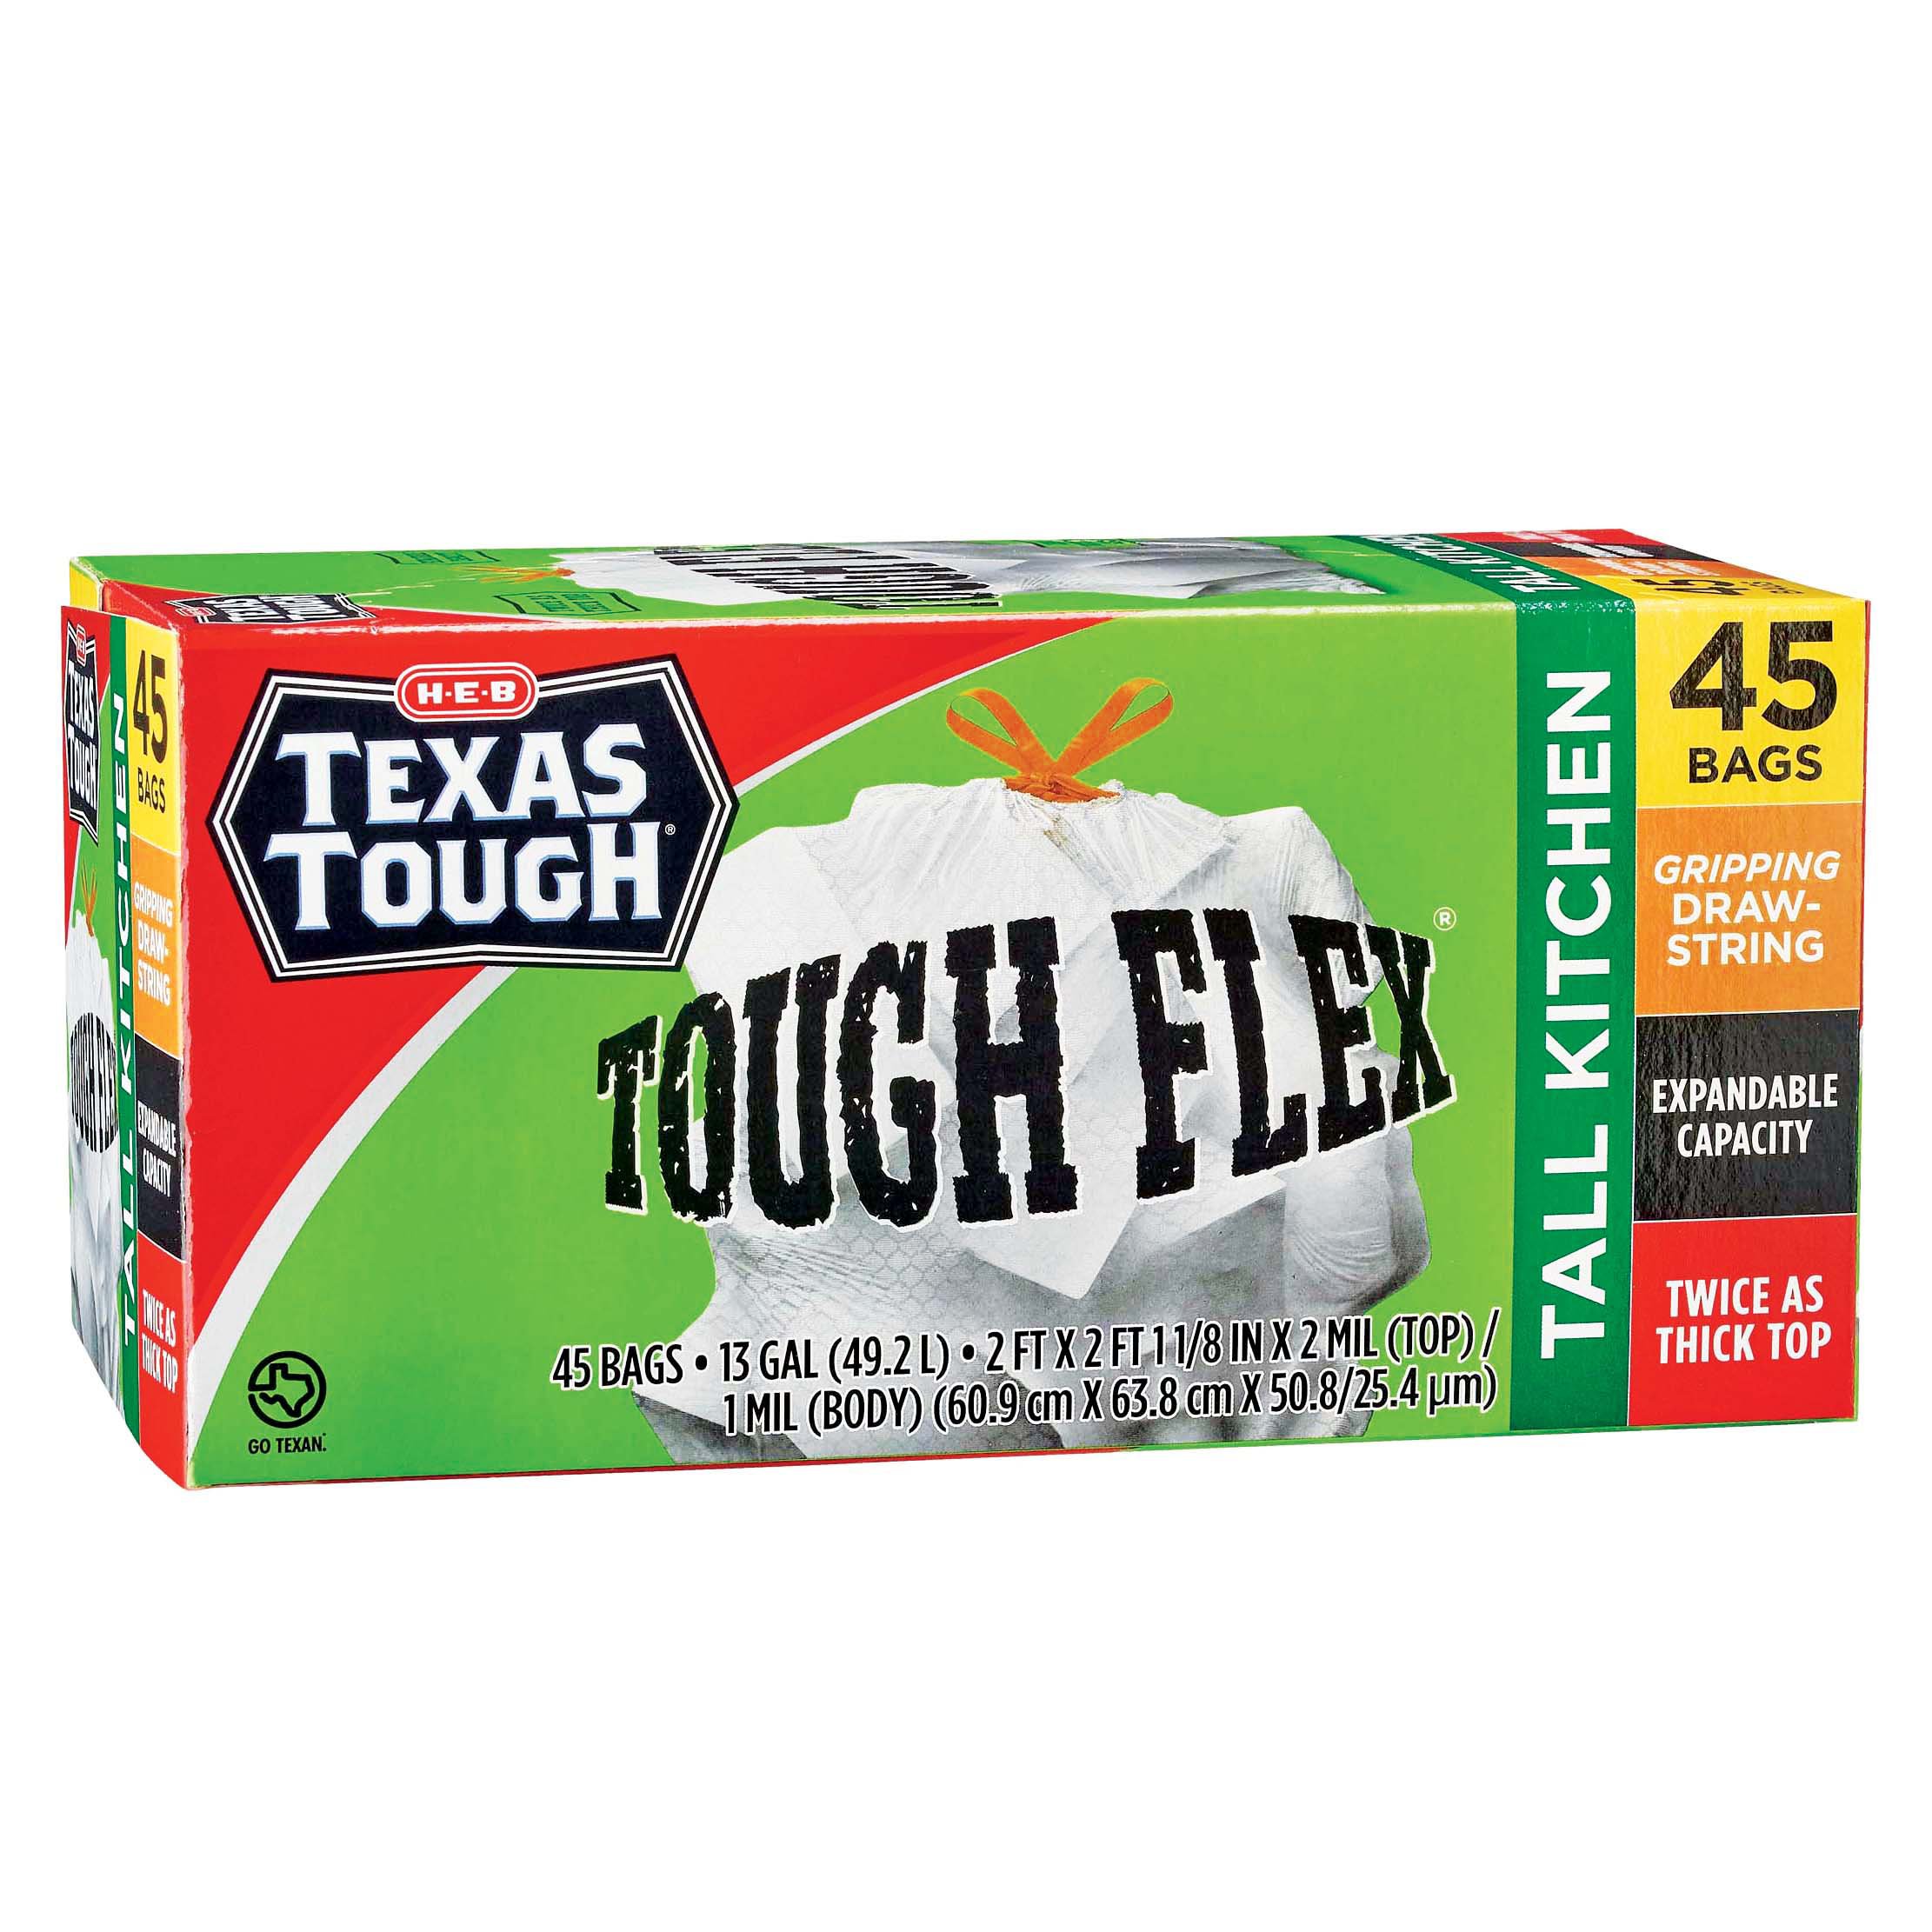 H-E-B Texas Tough Tall Kitchen Trash Bags, 13 Gallon - Fresh Scent